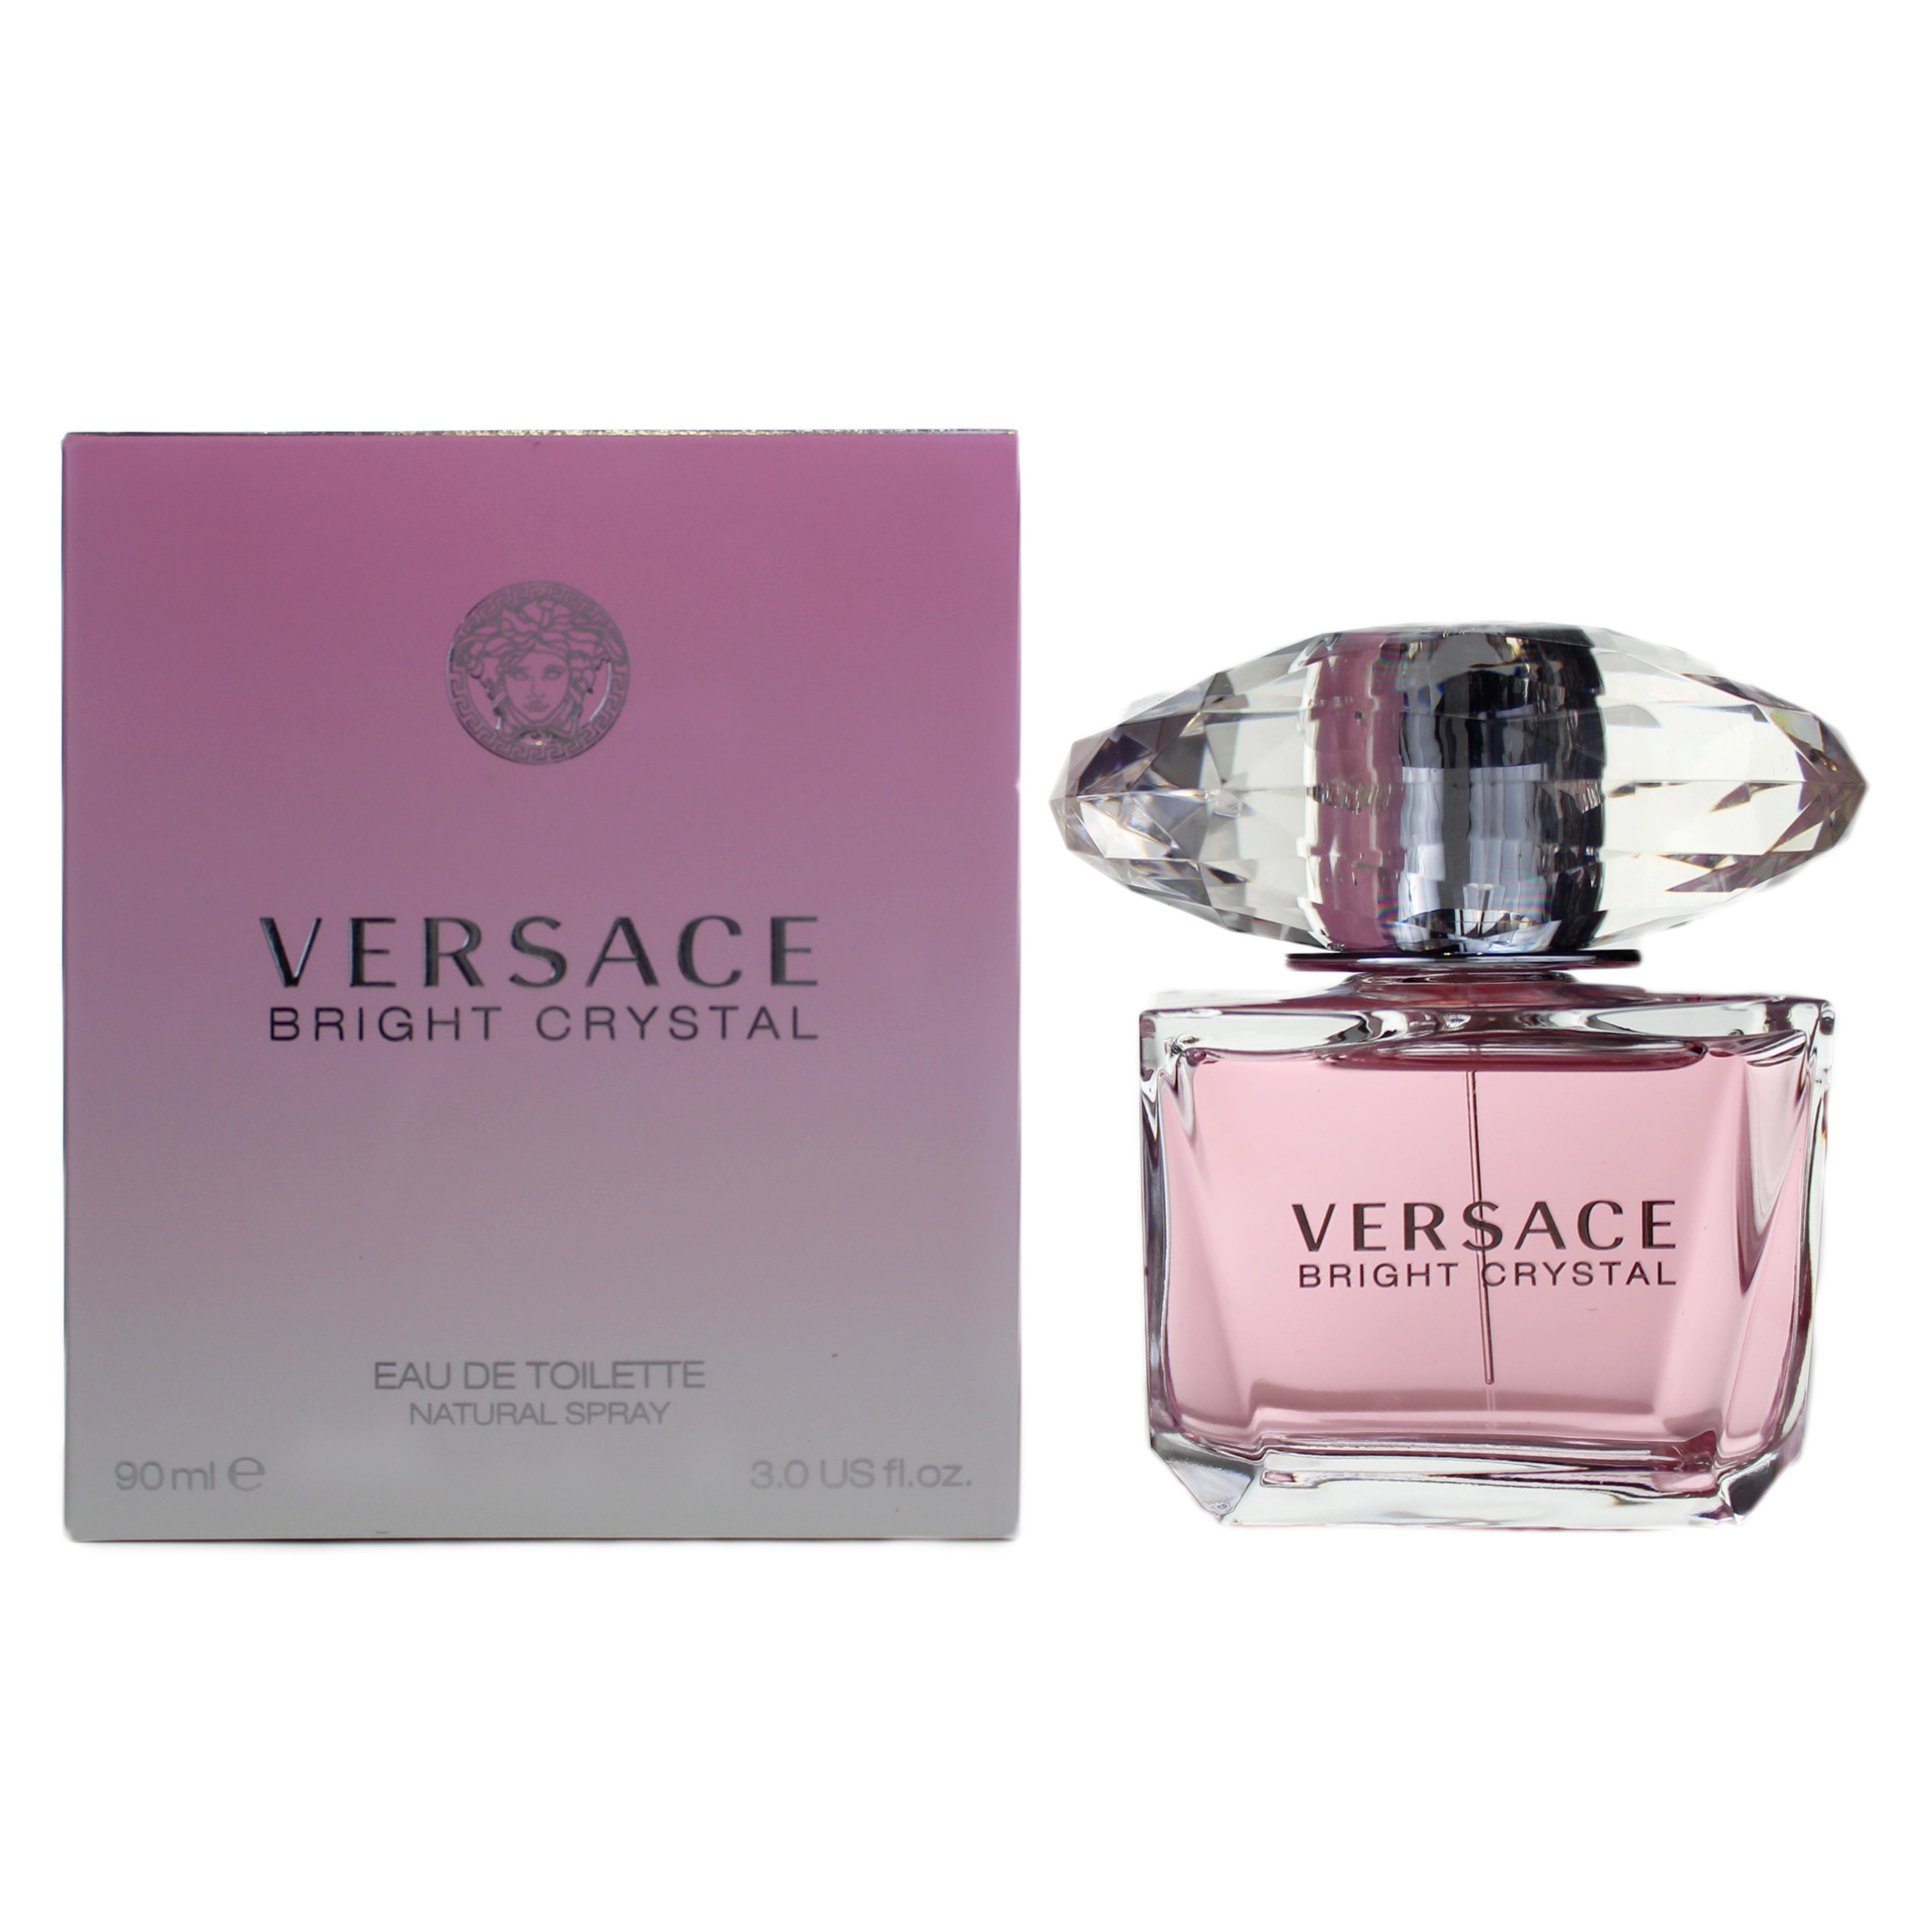 Versace Bright Crystal Perfume Eau De Toilette by Gianni Versace